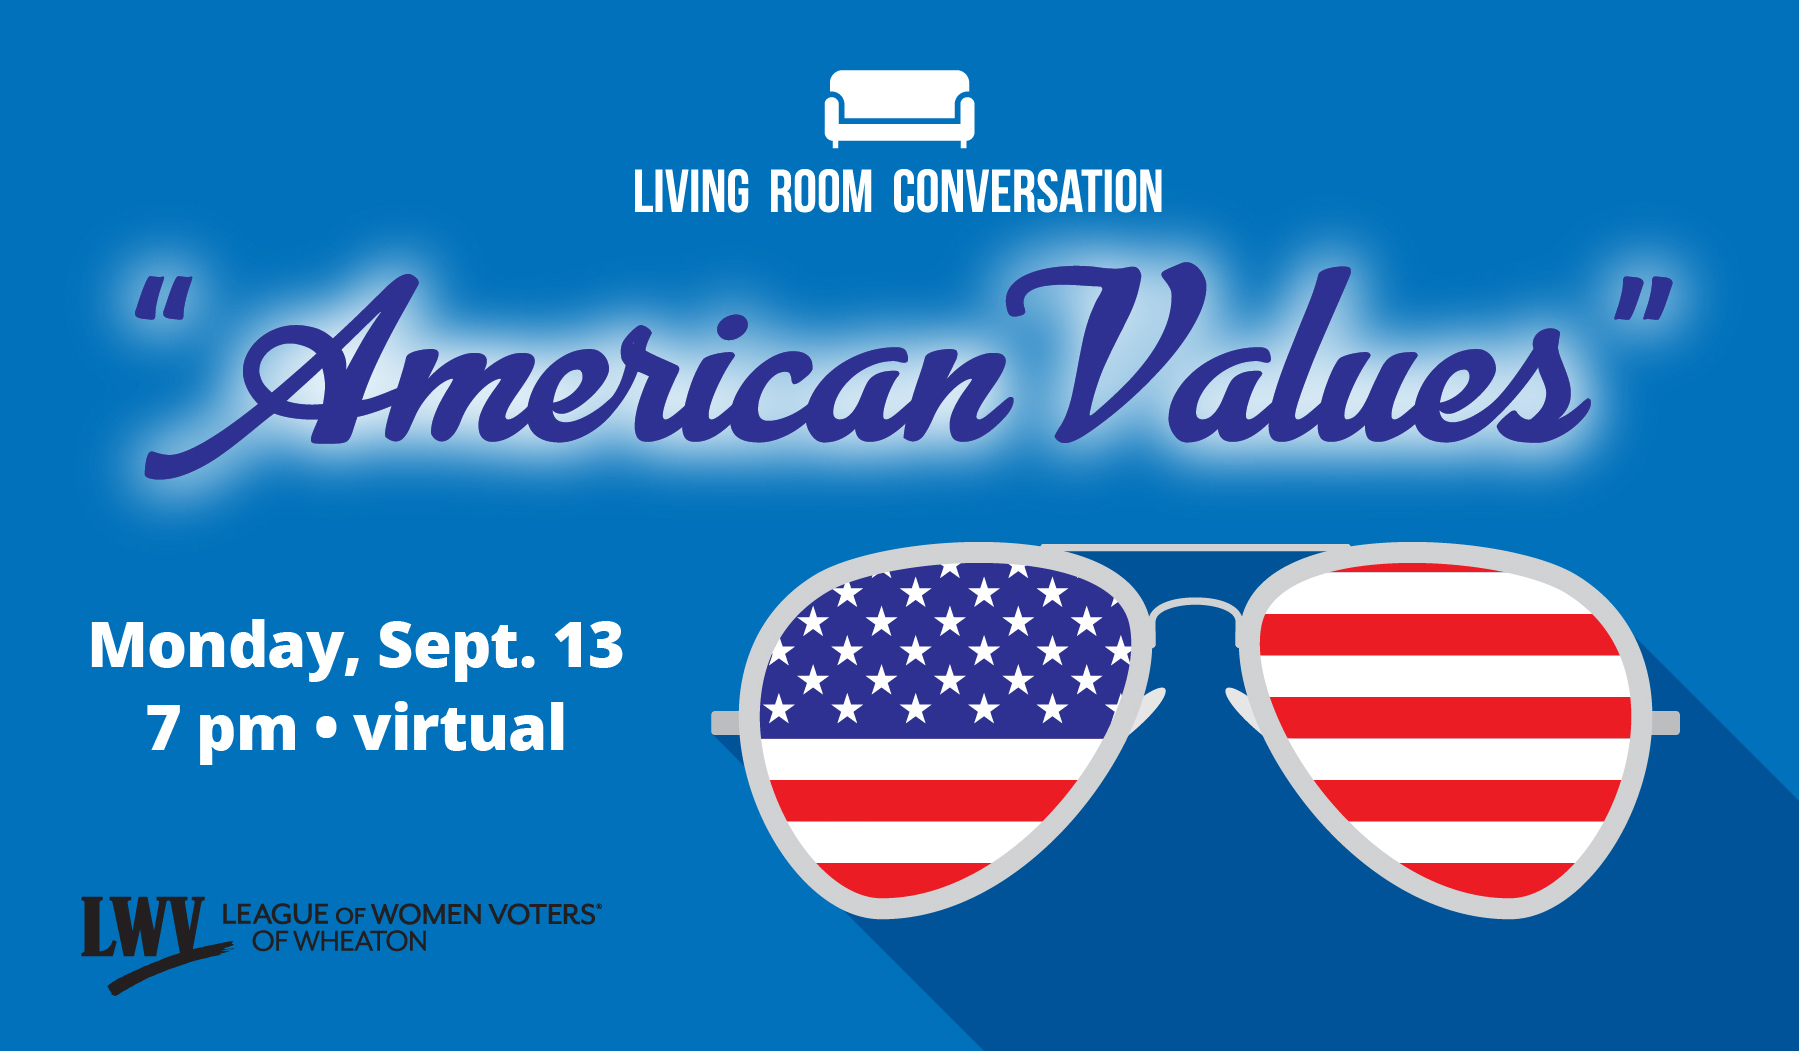 Living Room Conversation: "American Values"